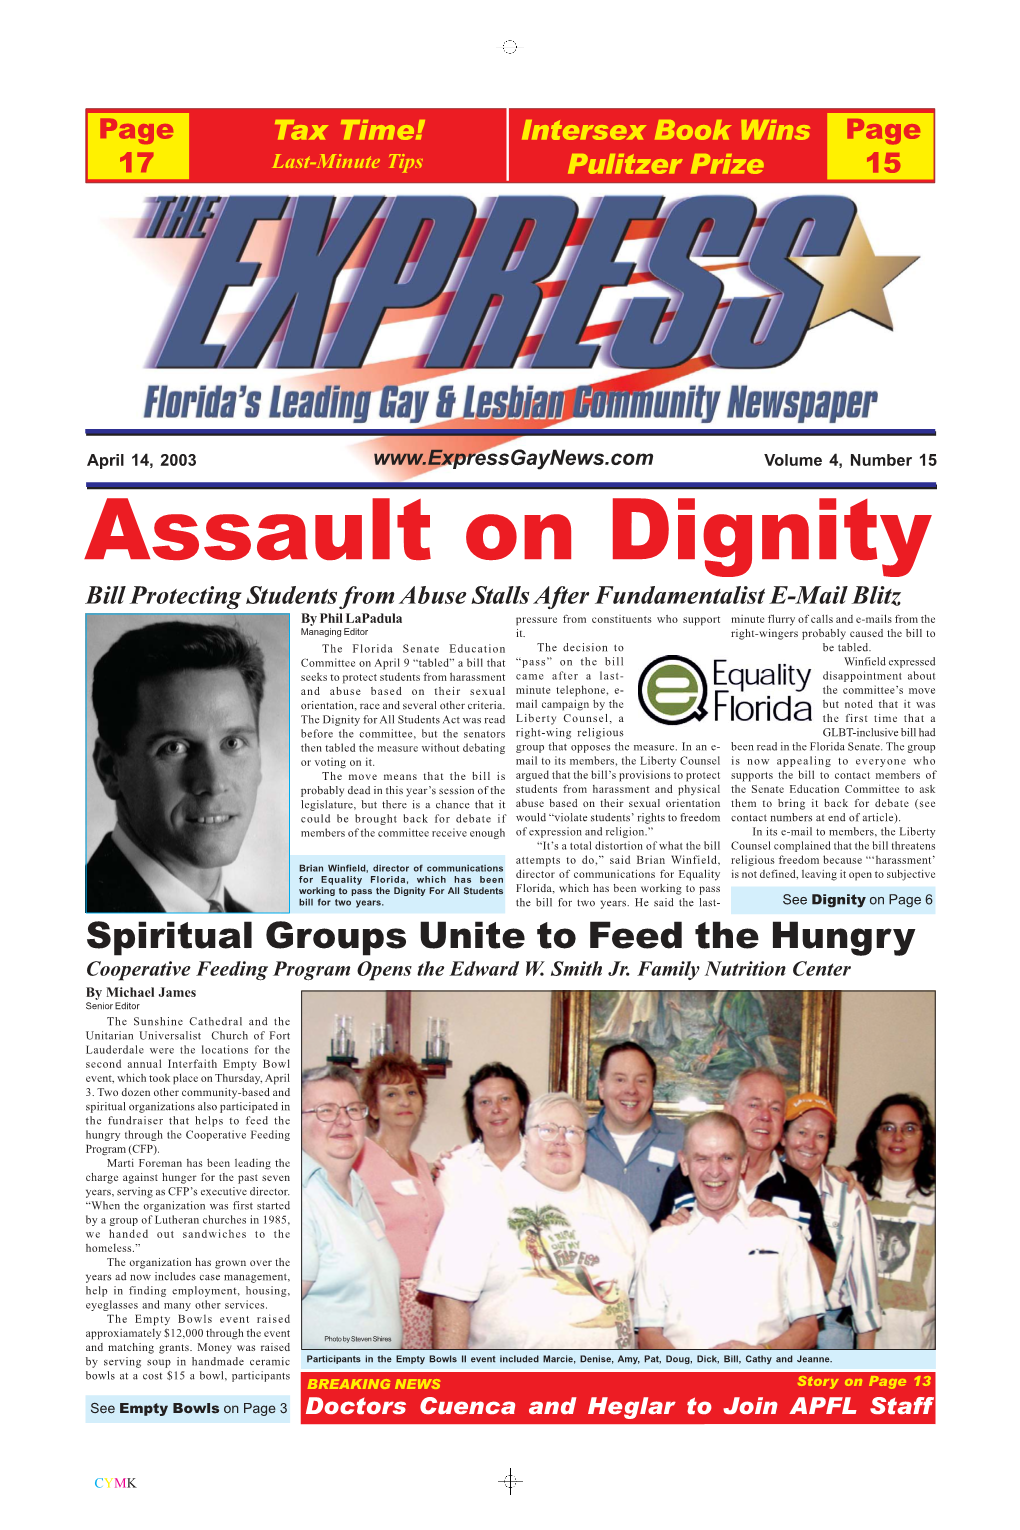 Spiritual Groups Unite to Feed the Hungry Cooperative Feeding Program Opens the Edward W